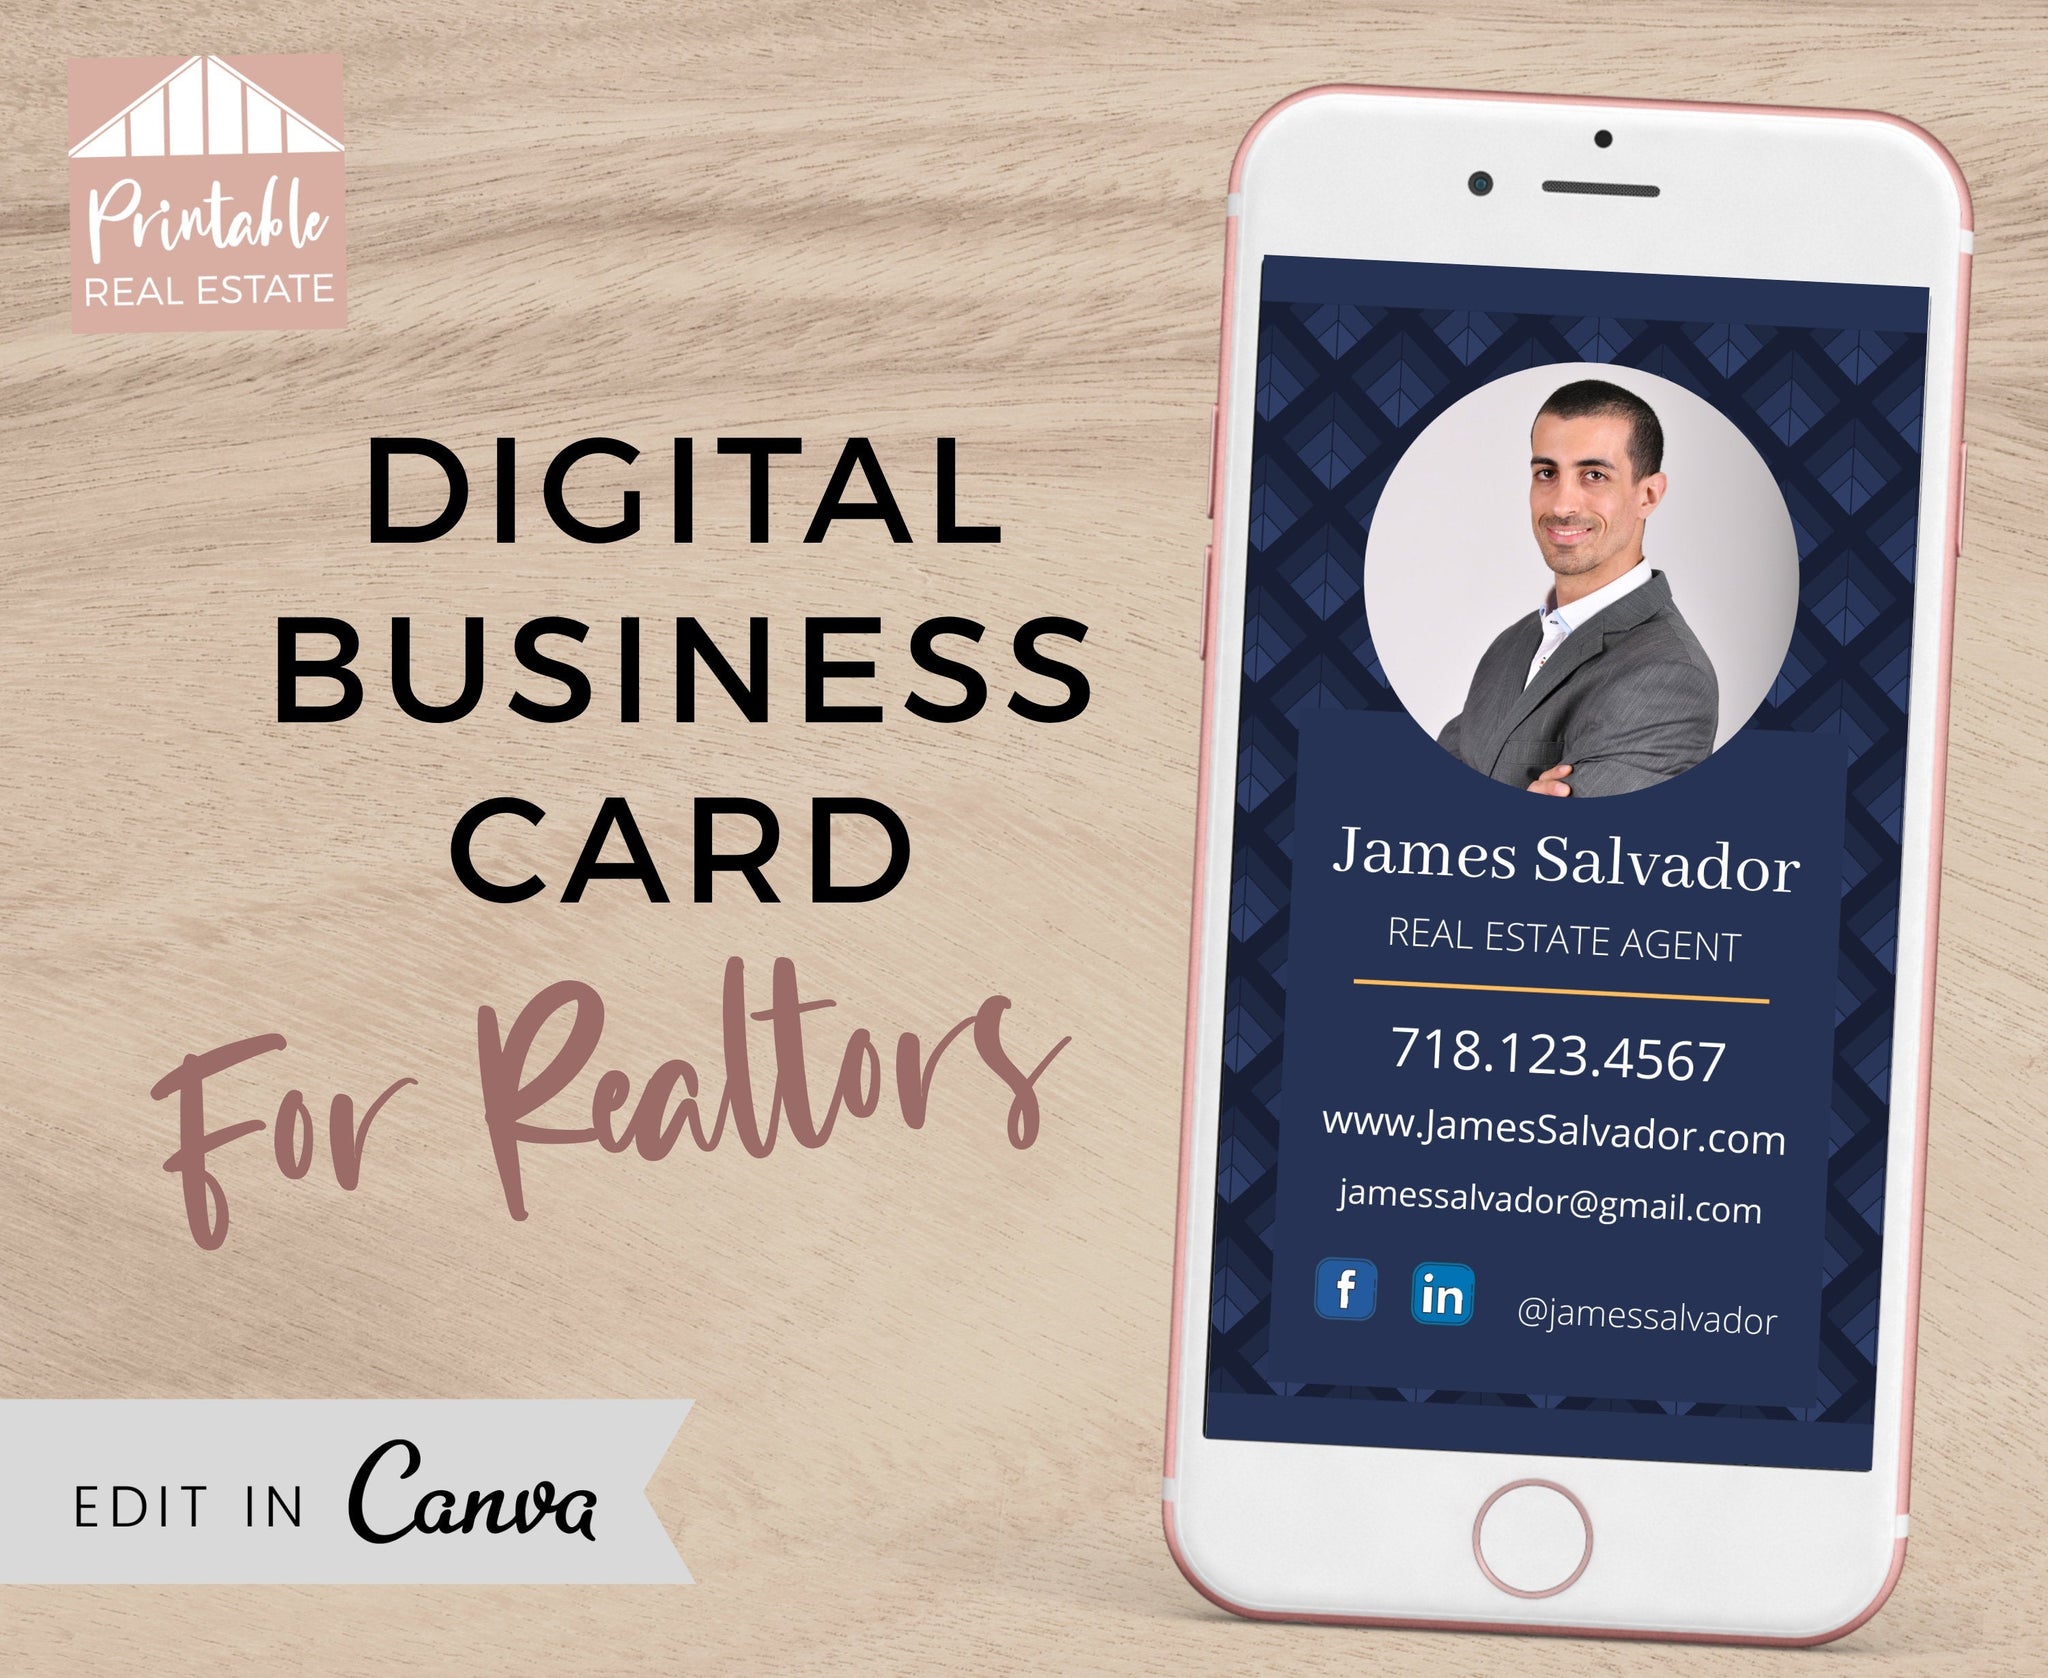 Business Cards Template I Editable Canva Template I Boutique Business Card  I Modern Business Card Design I DIY Business Cards Printable 